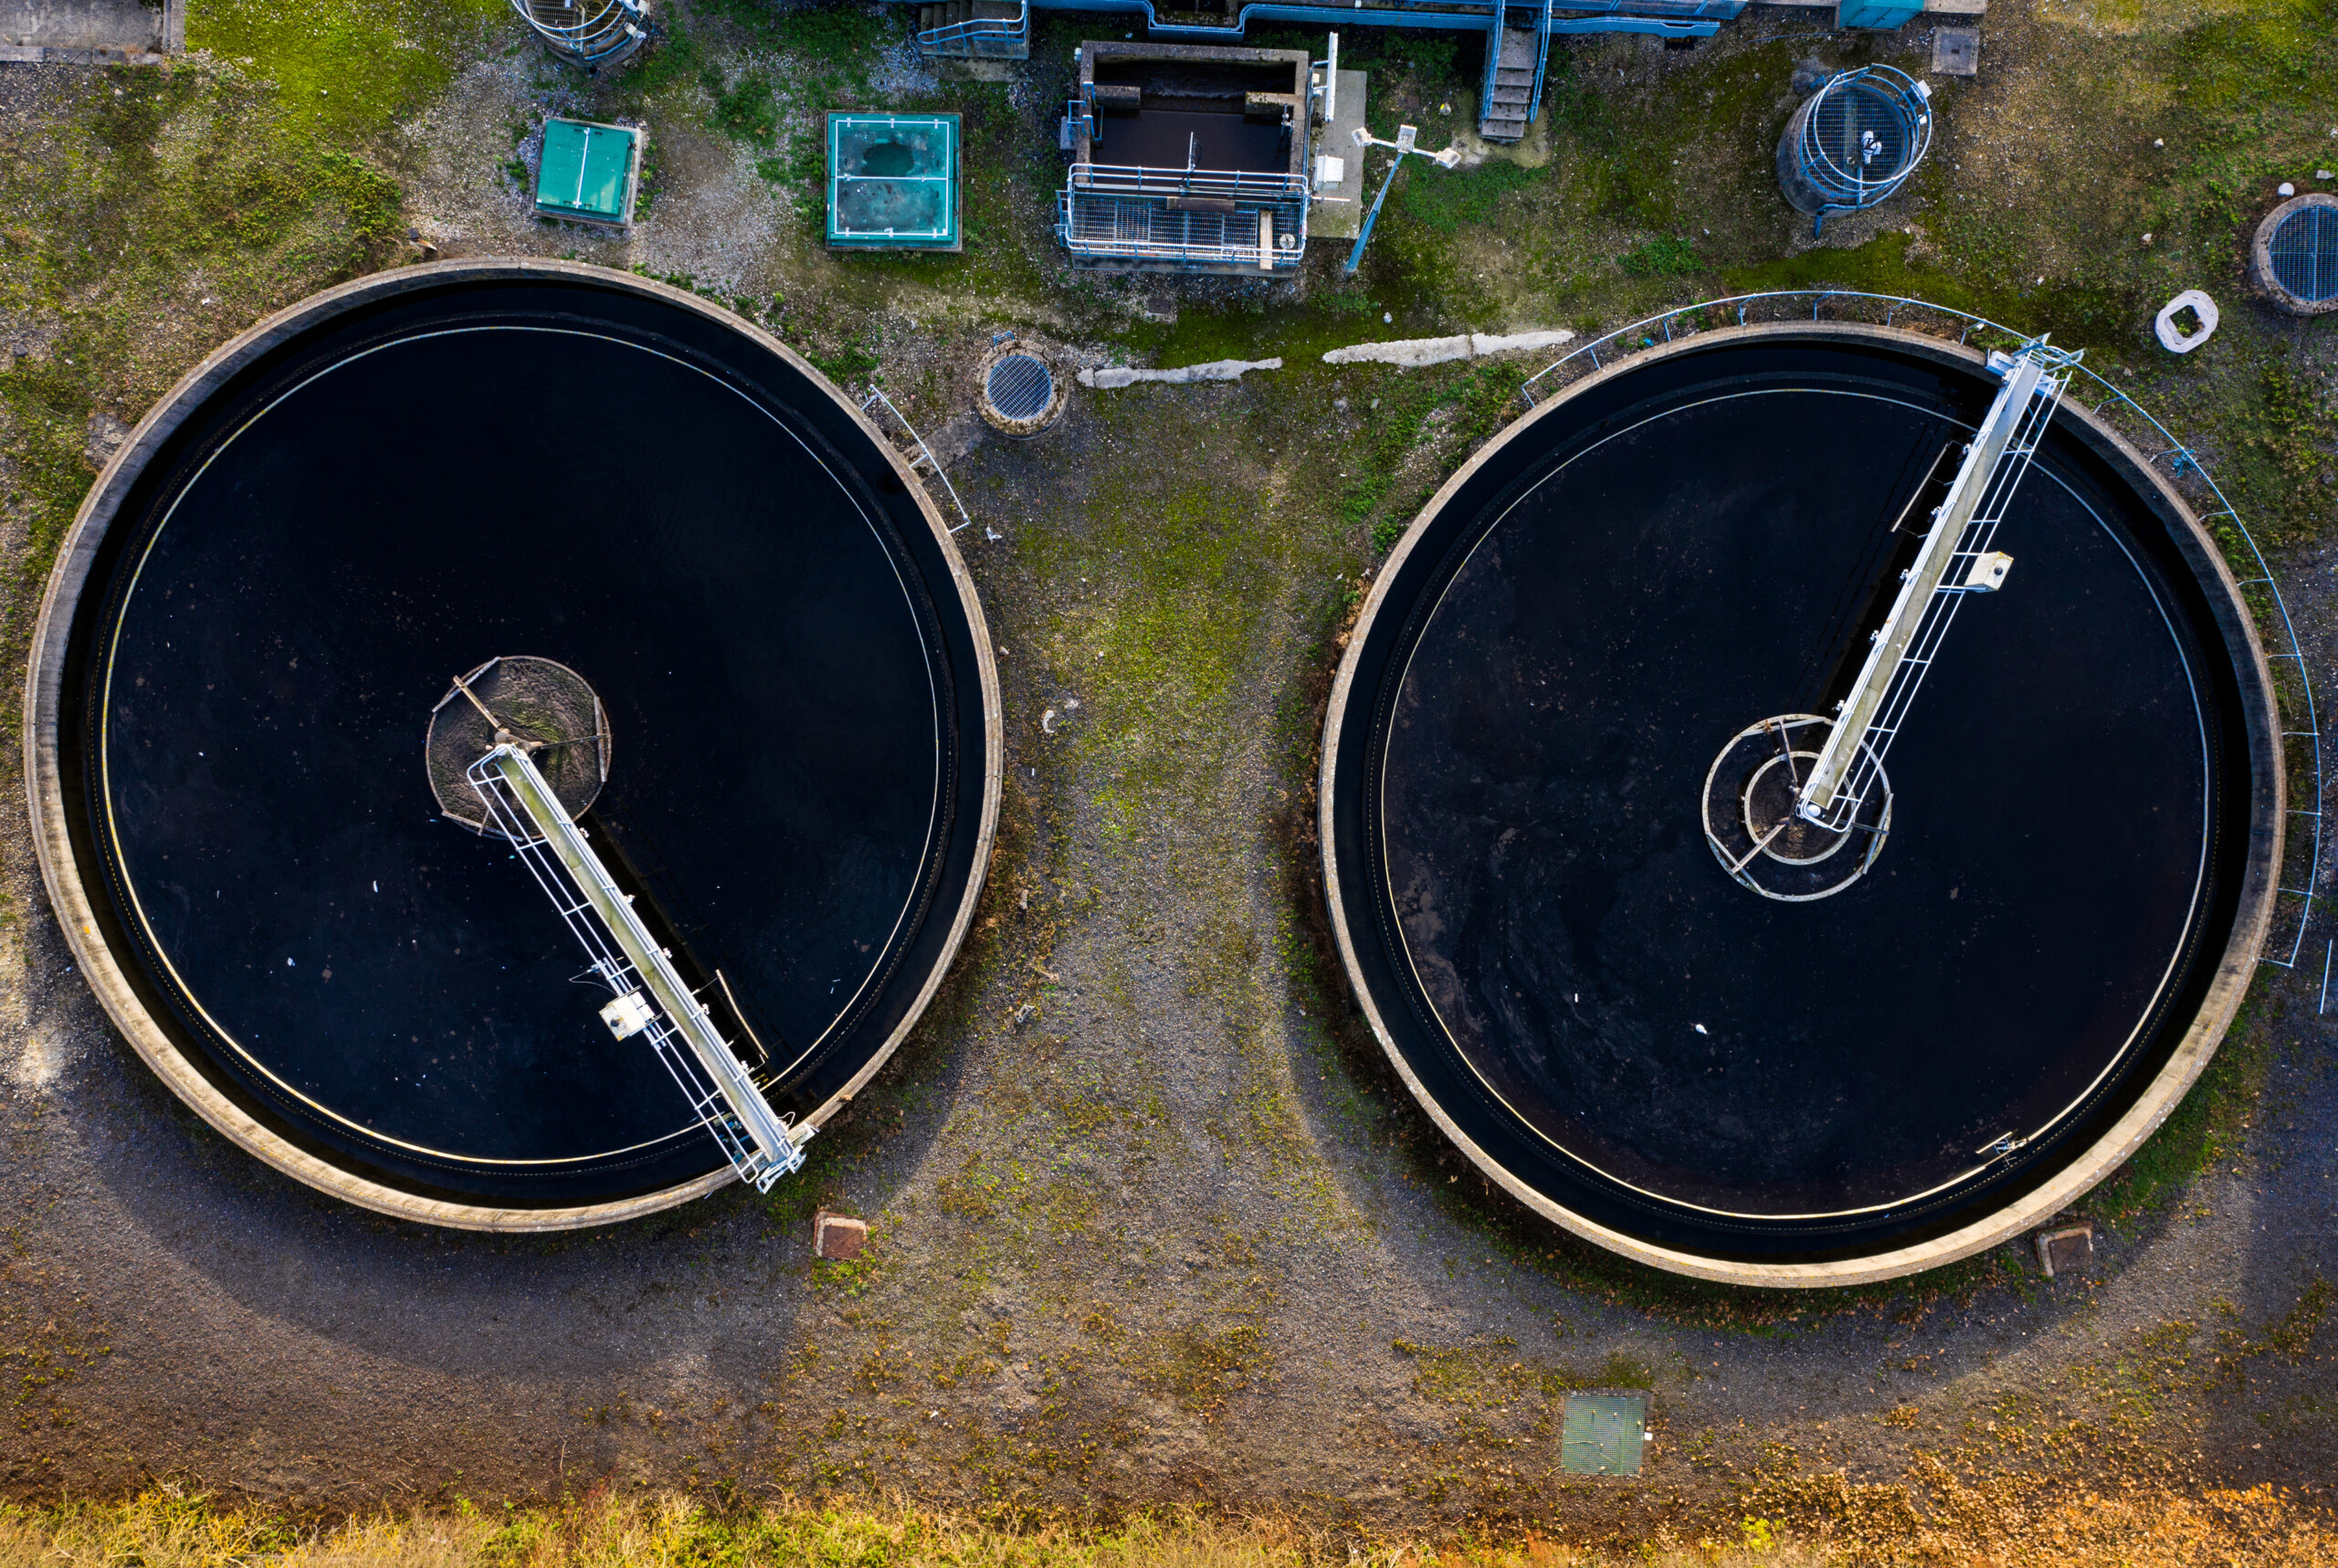 Water purification storage tanks